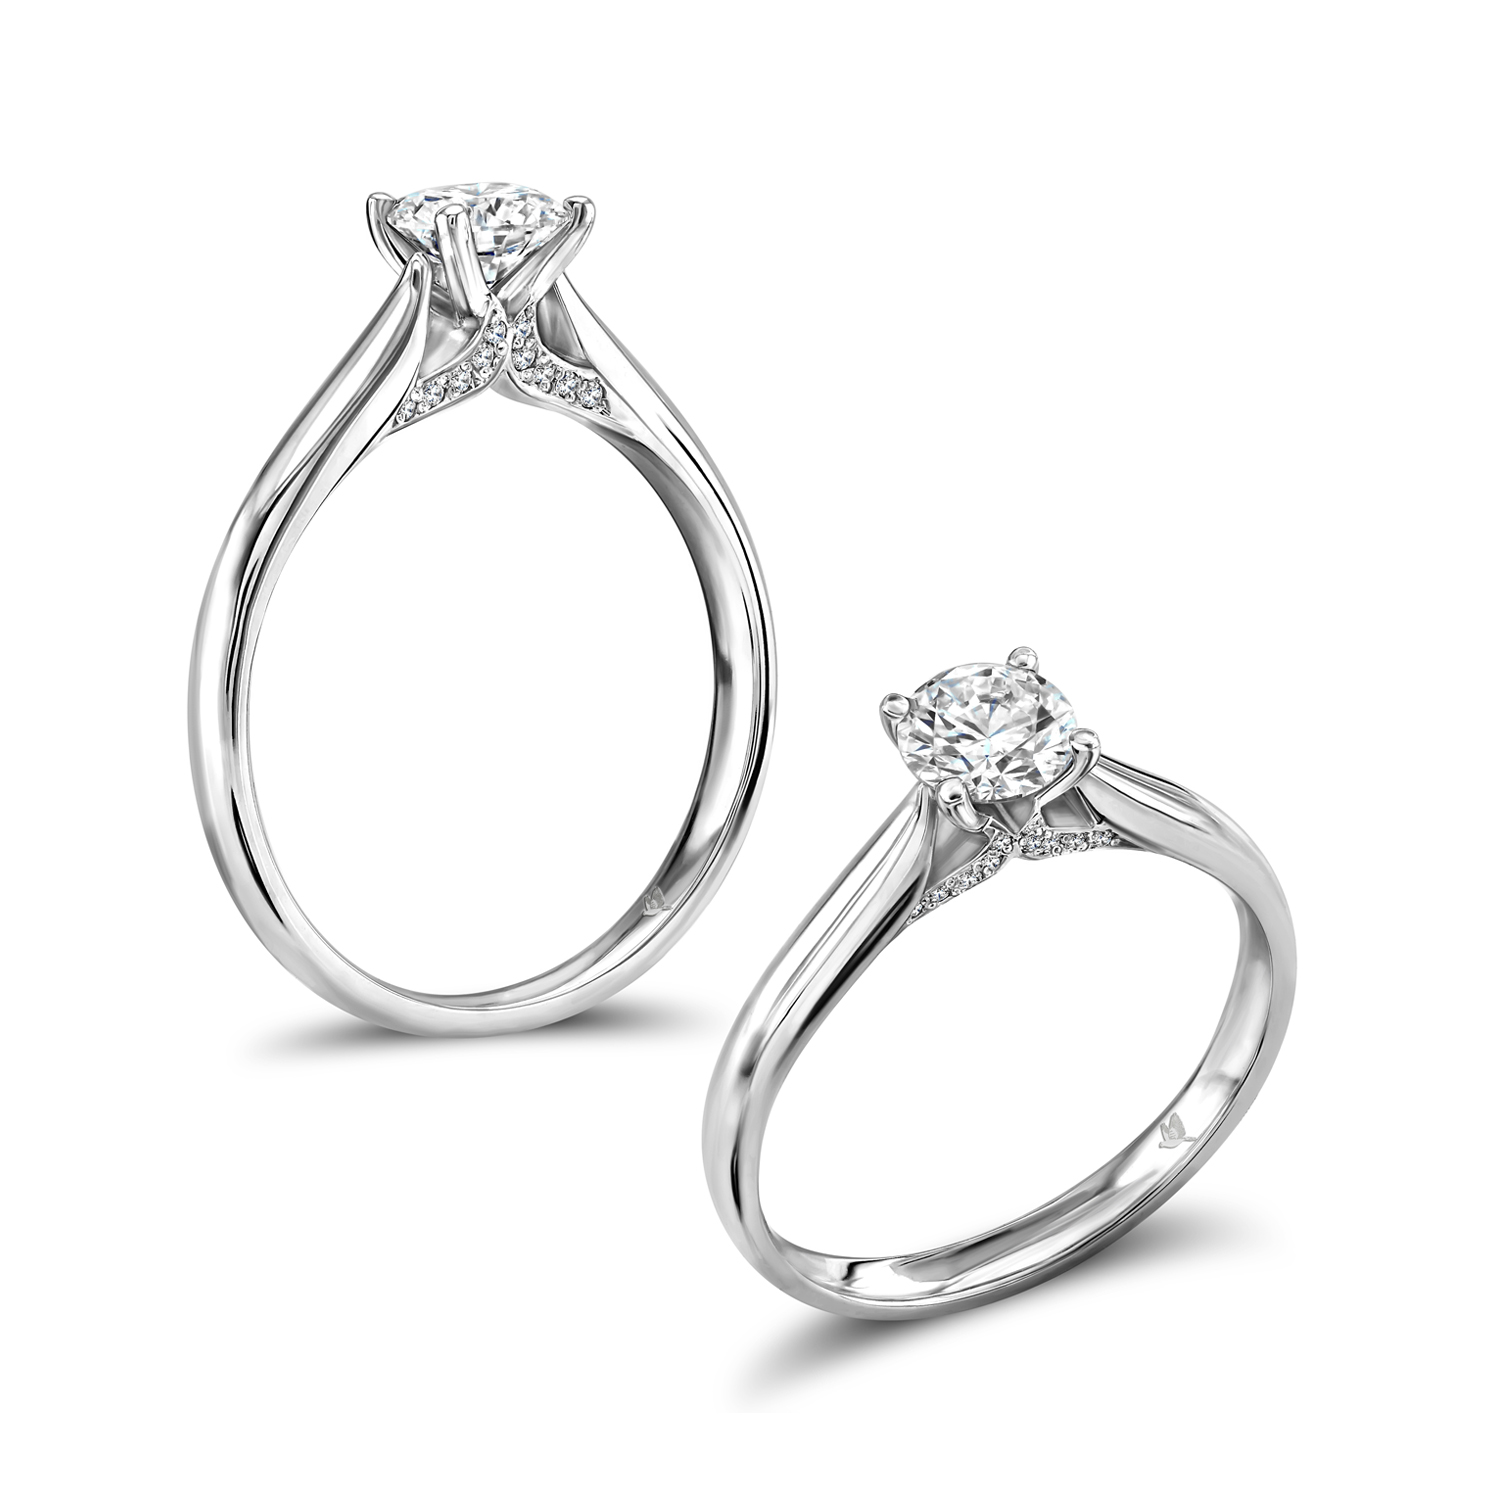 Brilliant cut diamond ring with intricate diamond set bezel detail